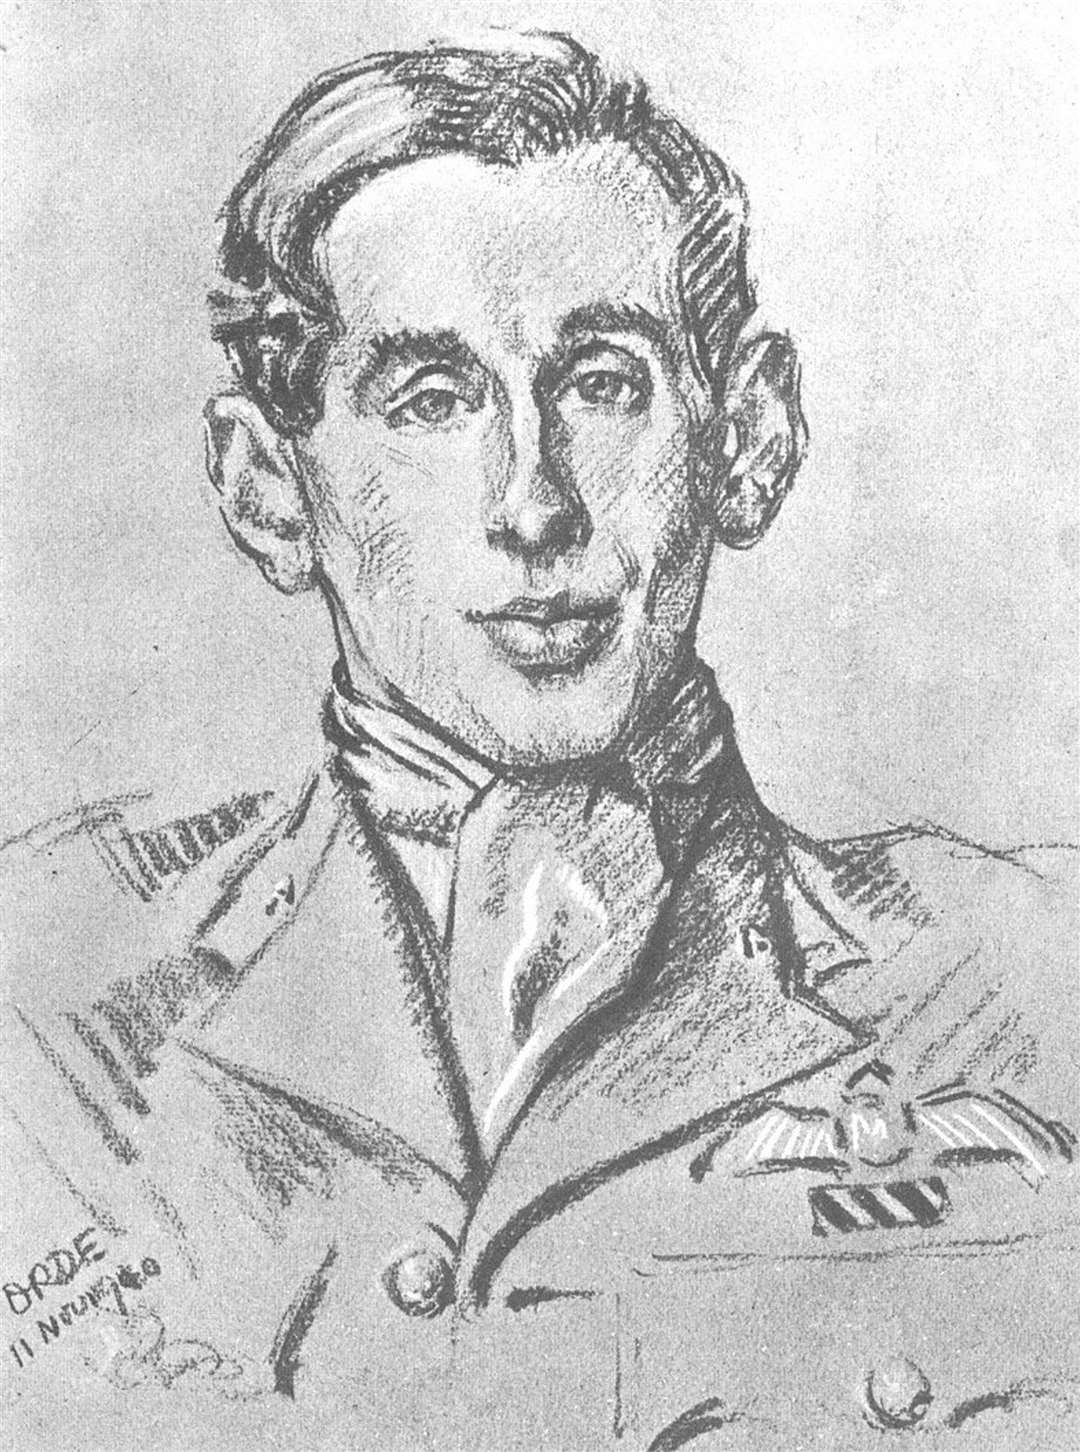 Portrait of Flying Officer John Dundas, drawn by Cuthbert Orde (RAF)